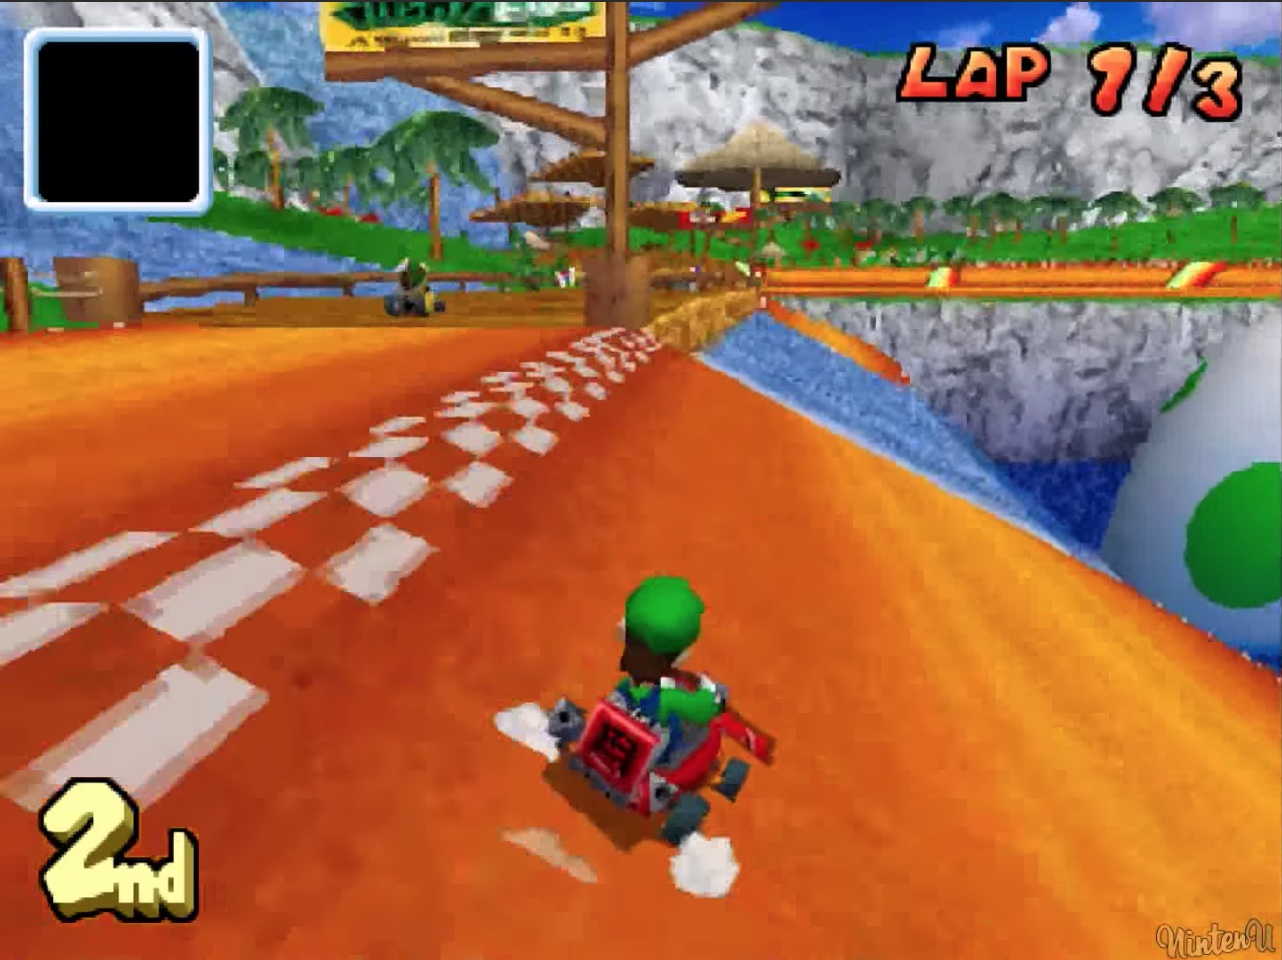 Mario Kart DS gameplay footage (2005)